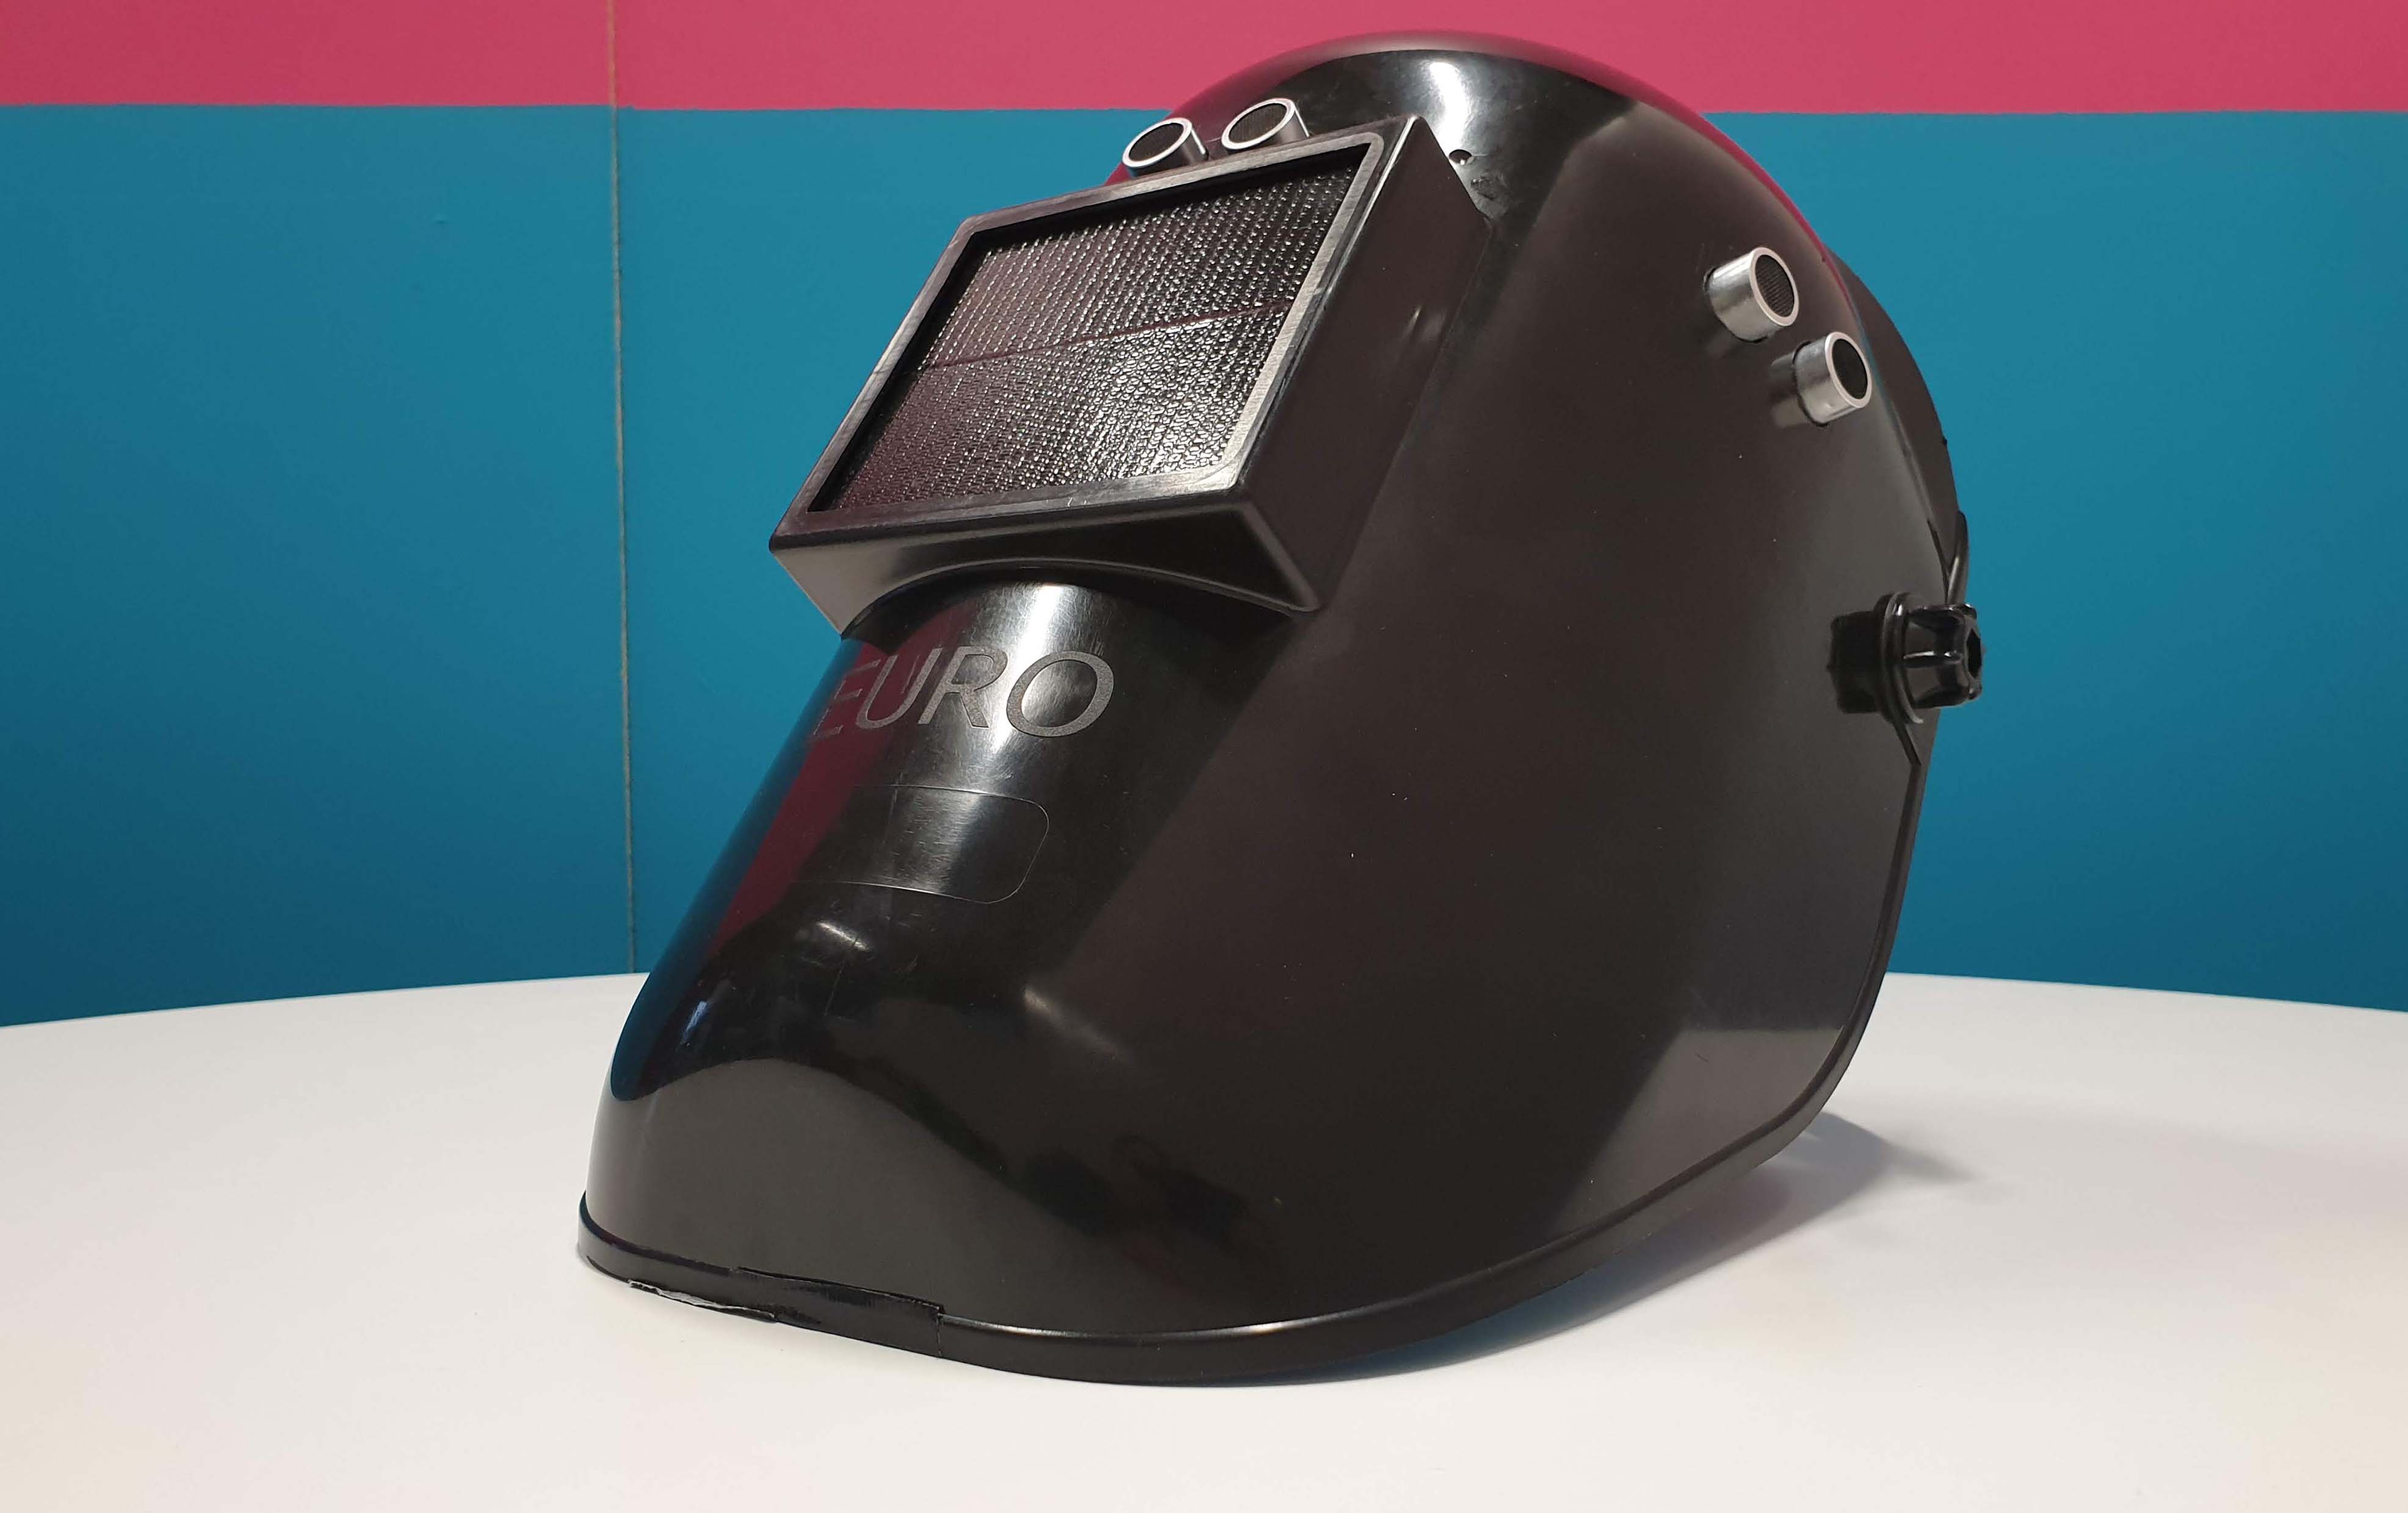 A welding helmet with ultrasonic sensors put in